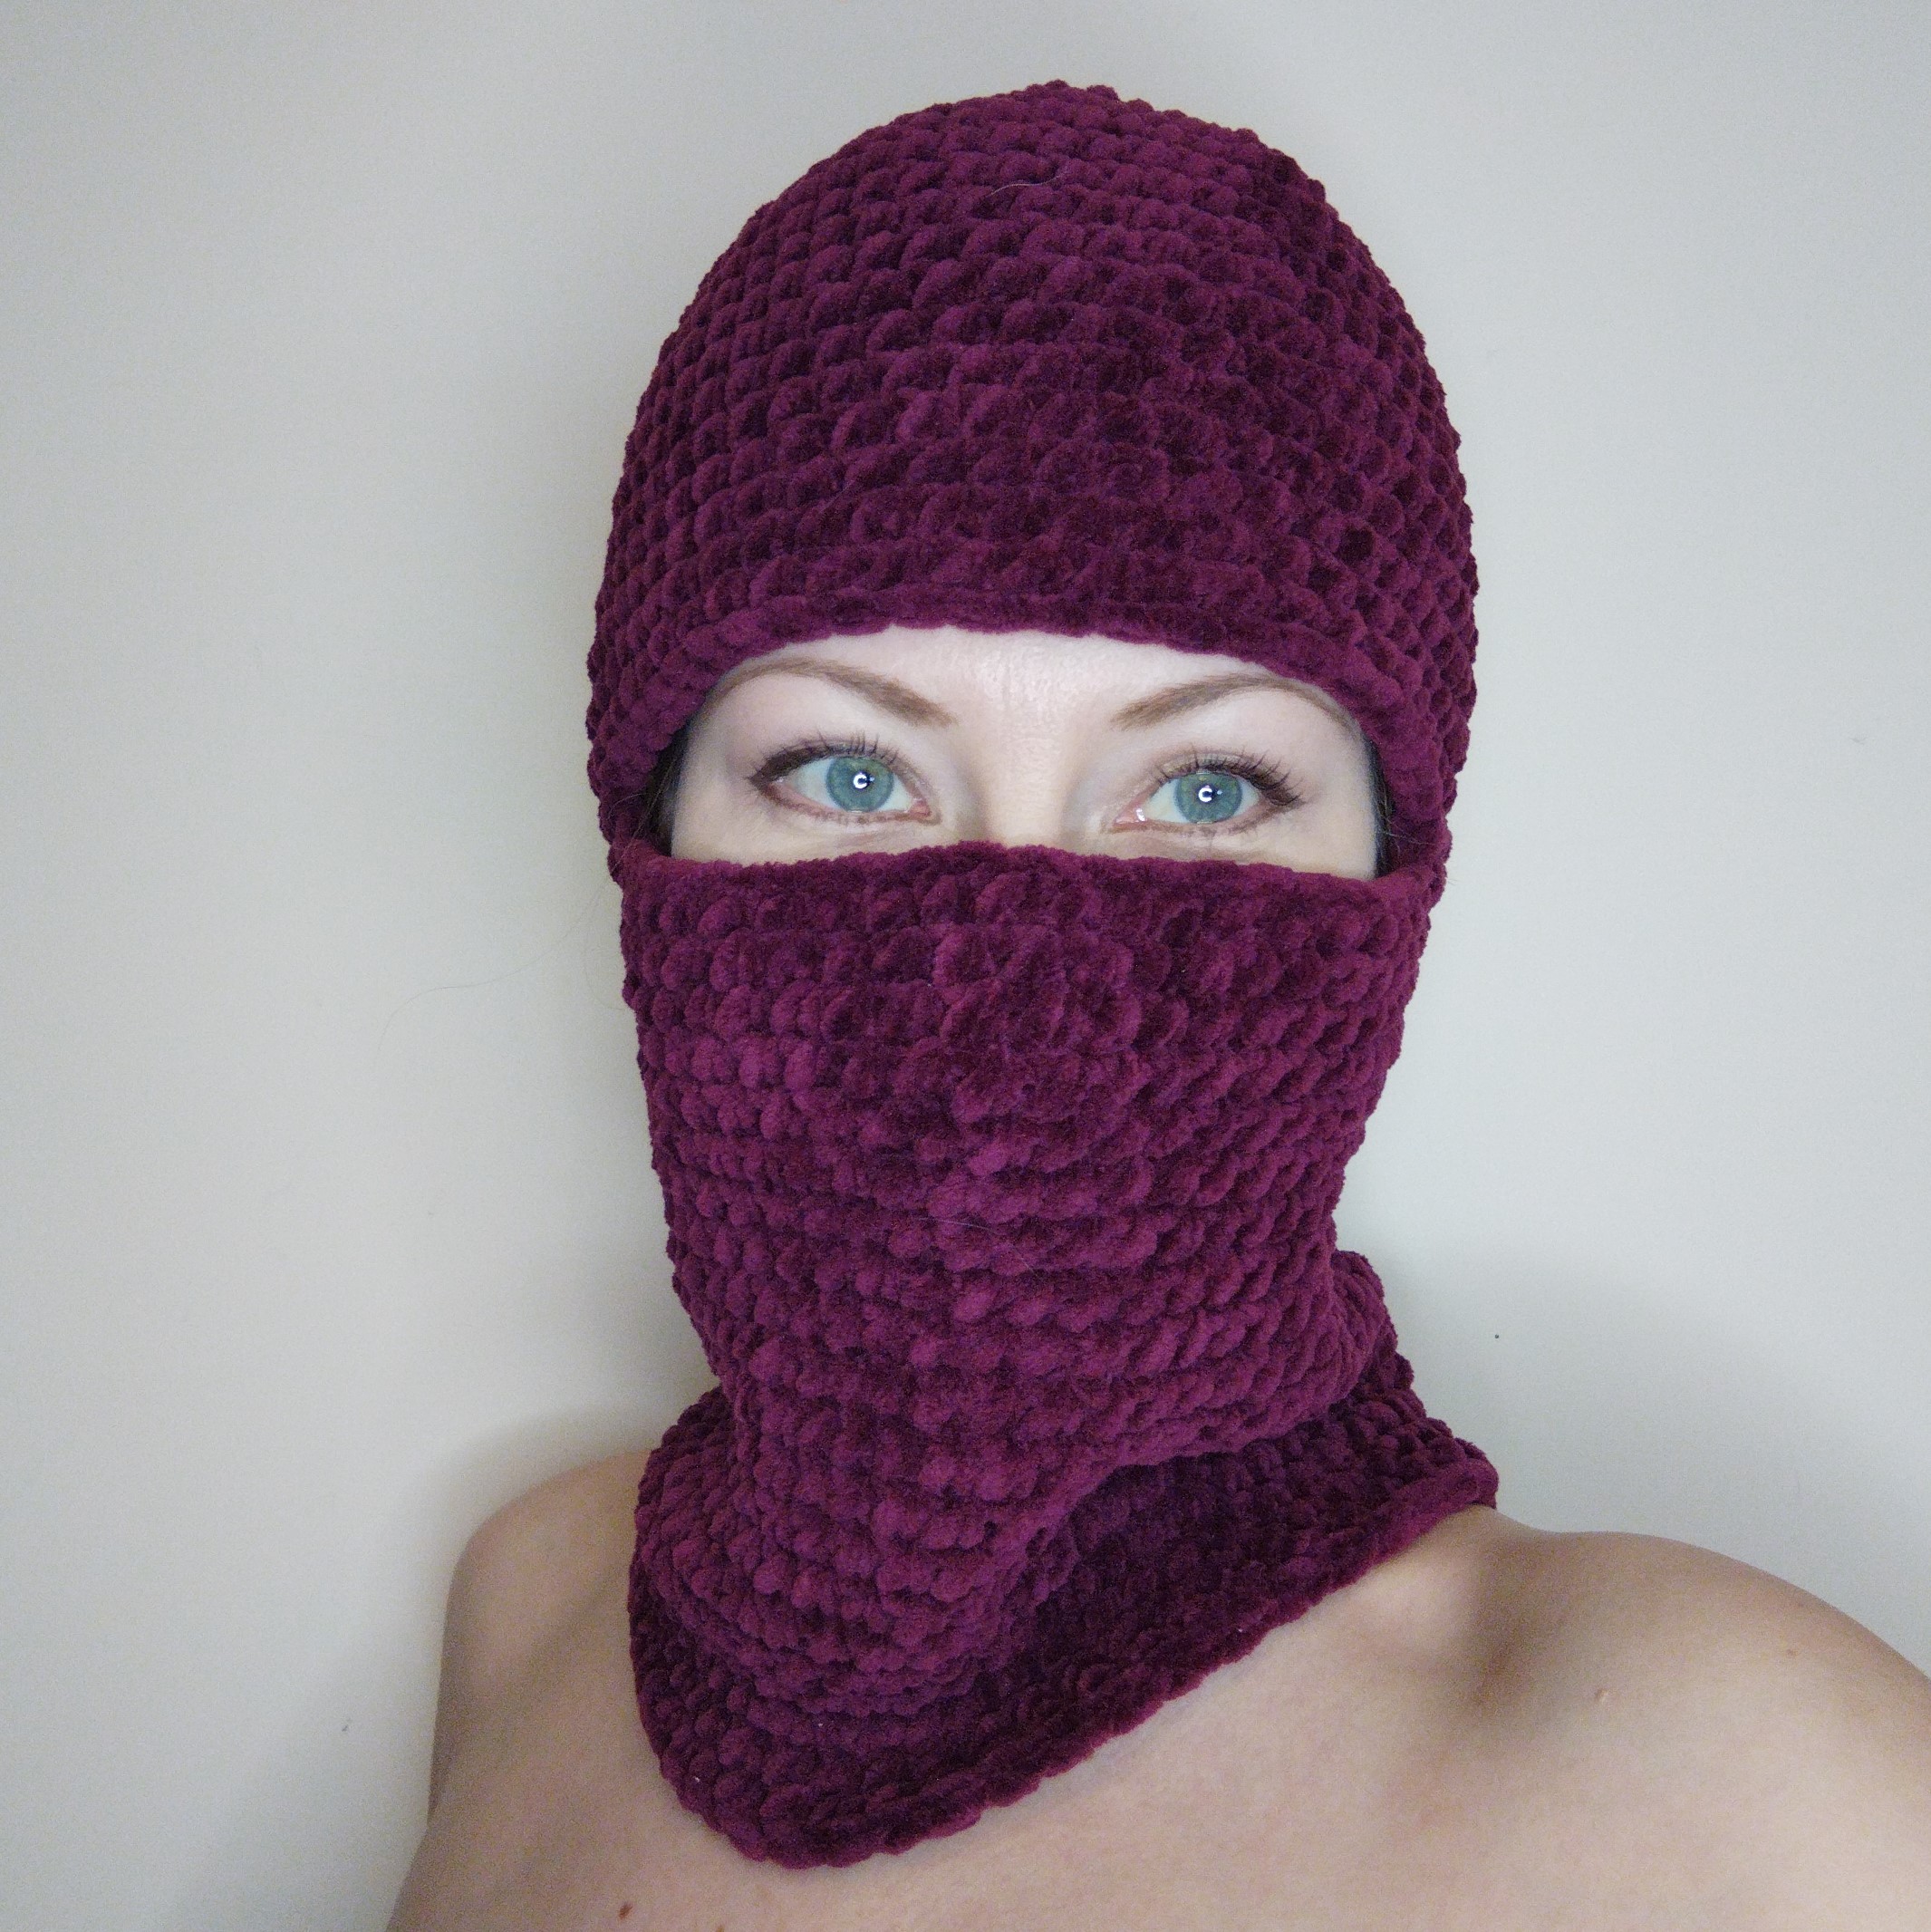 Hand knit balaclava Crochet ski mask Full face helmet hat